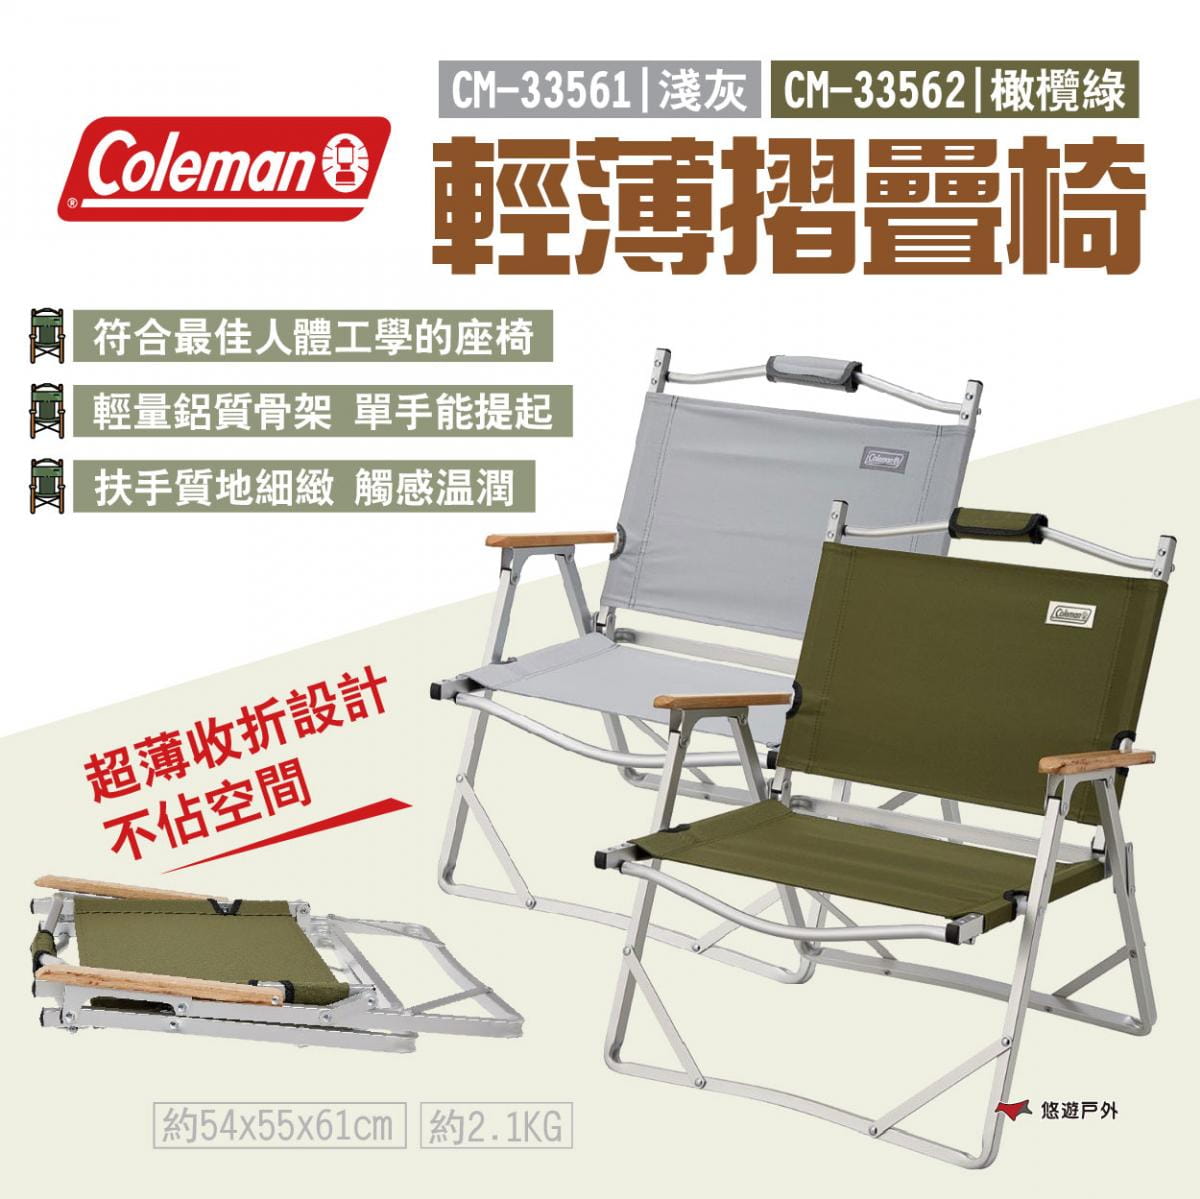 【Coleman】輕薄摺疊椅 淺灰/橄欖綠 CM-33561/CM-33562 悠遊戶外 1